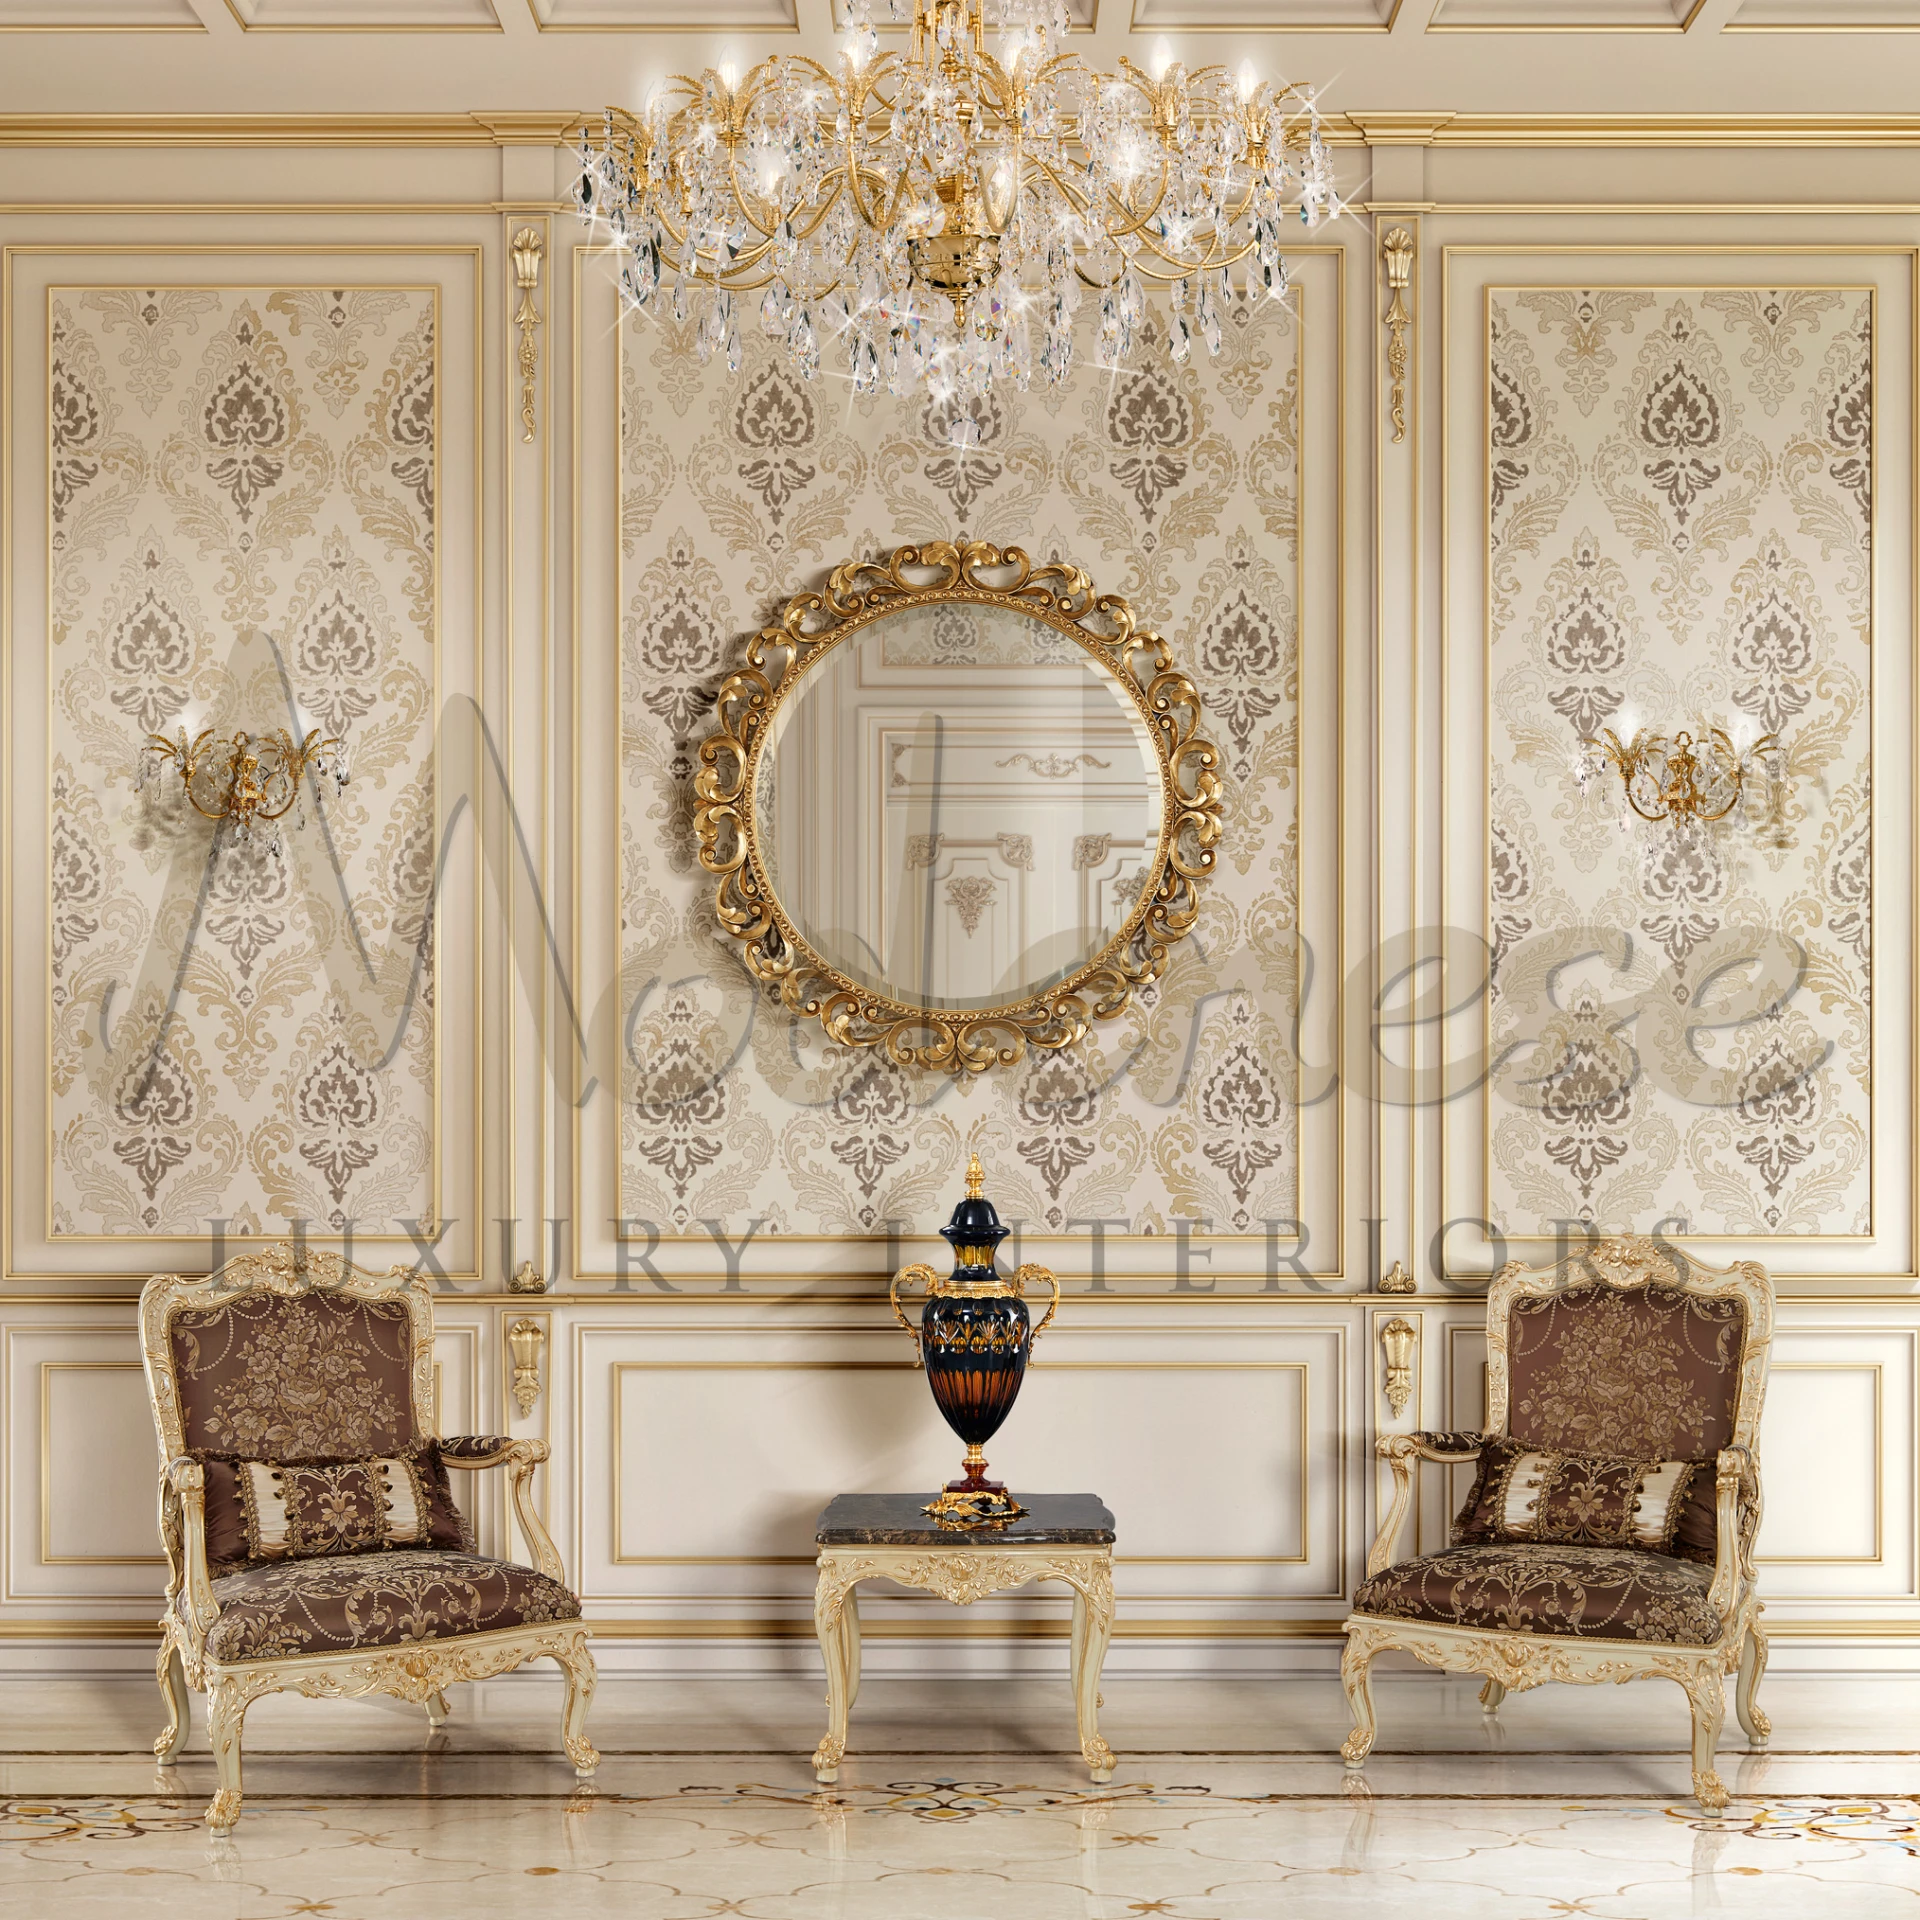 Classic furniture redefined: Dutch Brown Cream Armchair combines luxury fabric, Italian design, and baroque elegance.